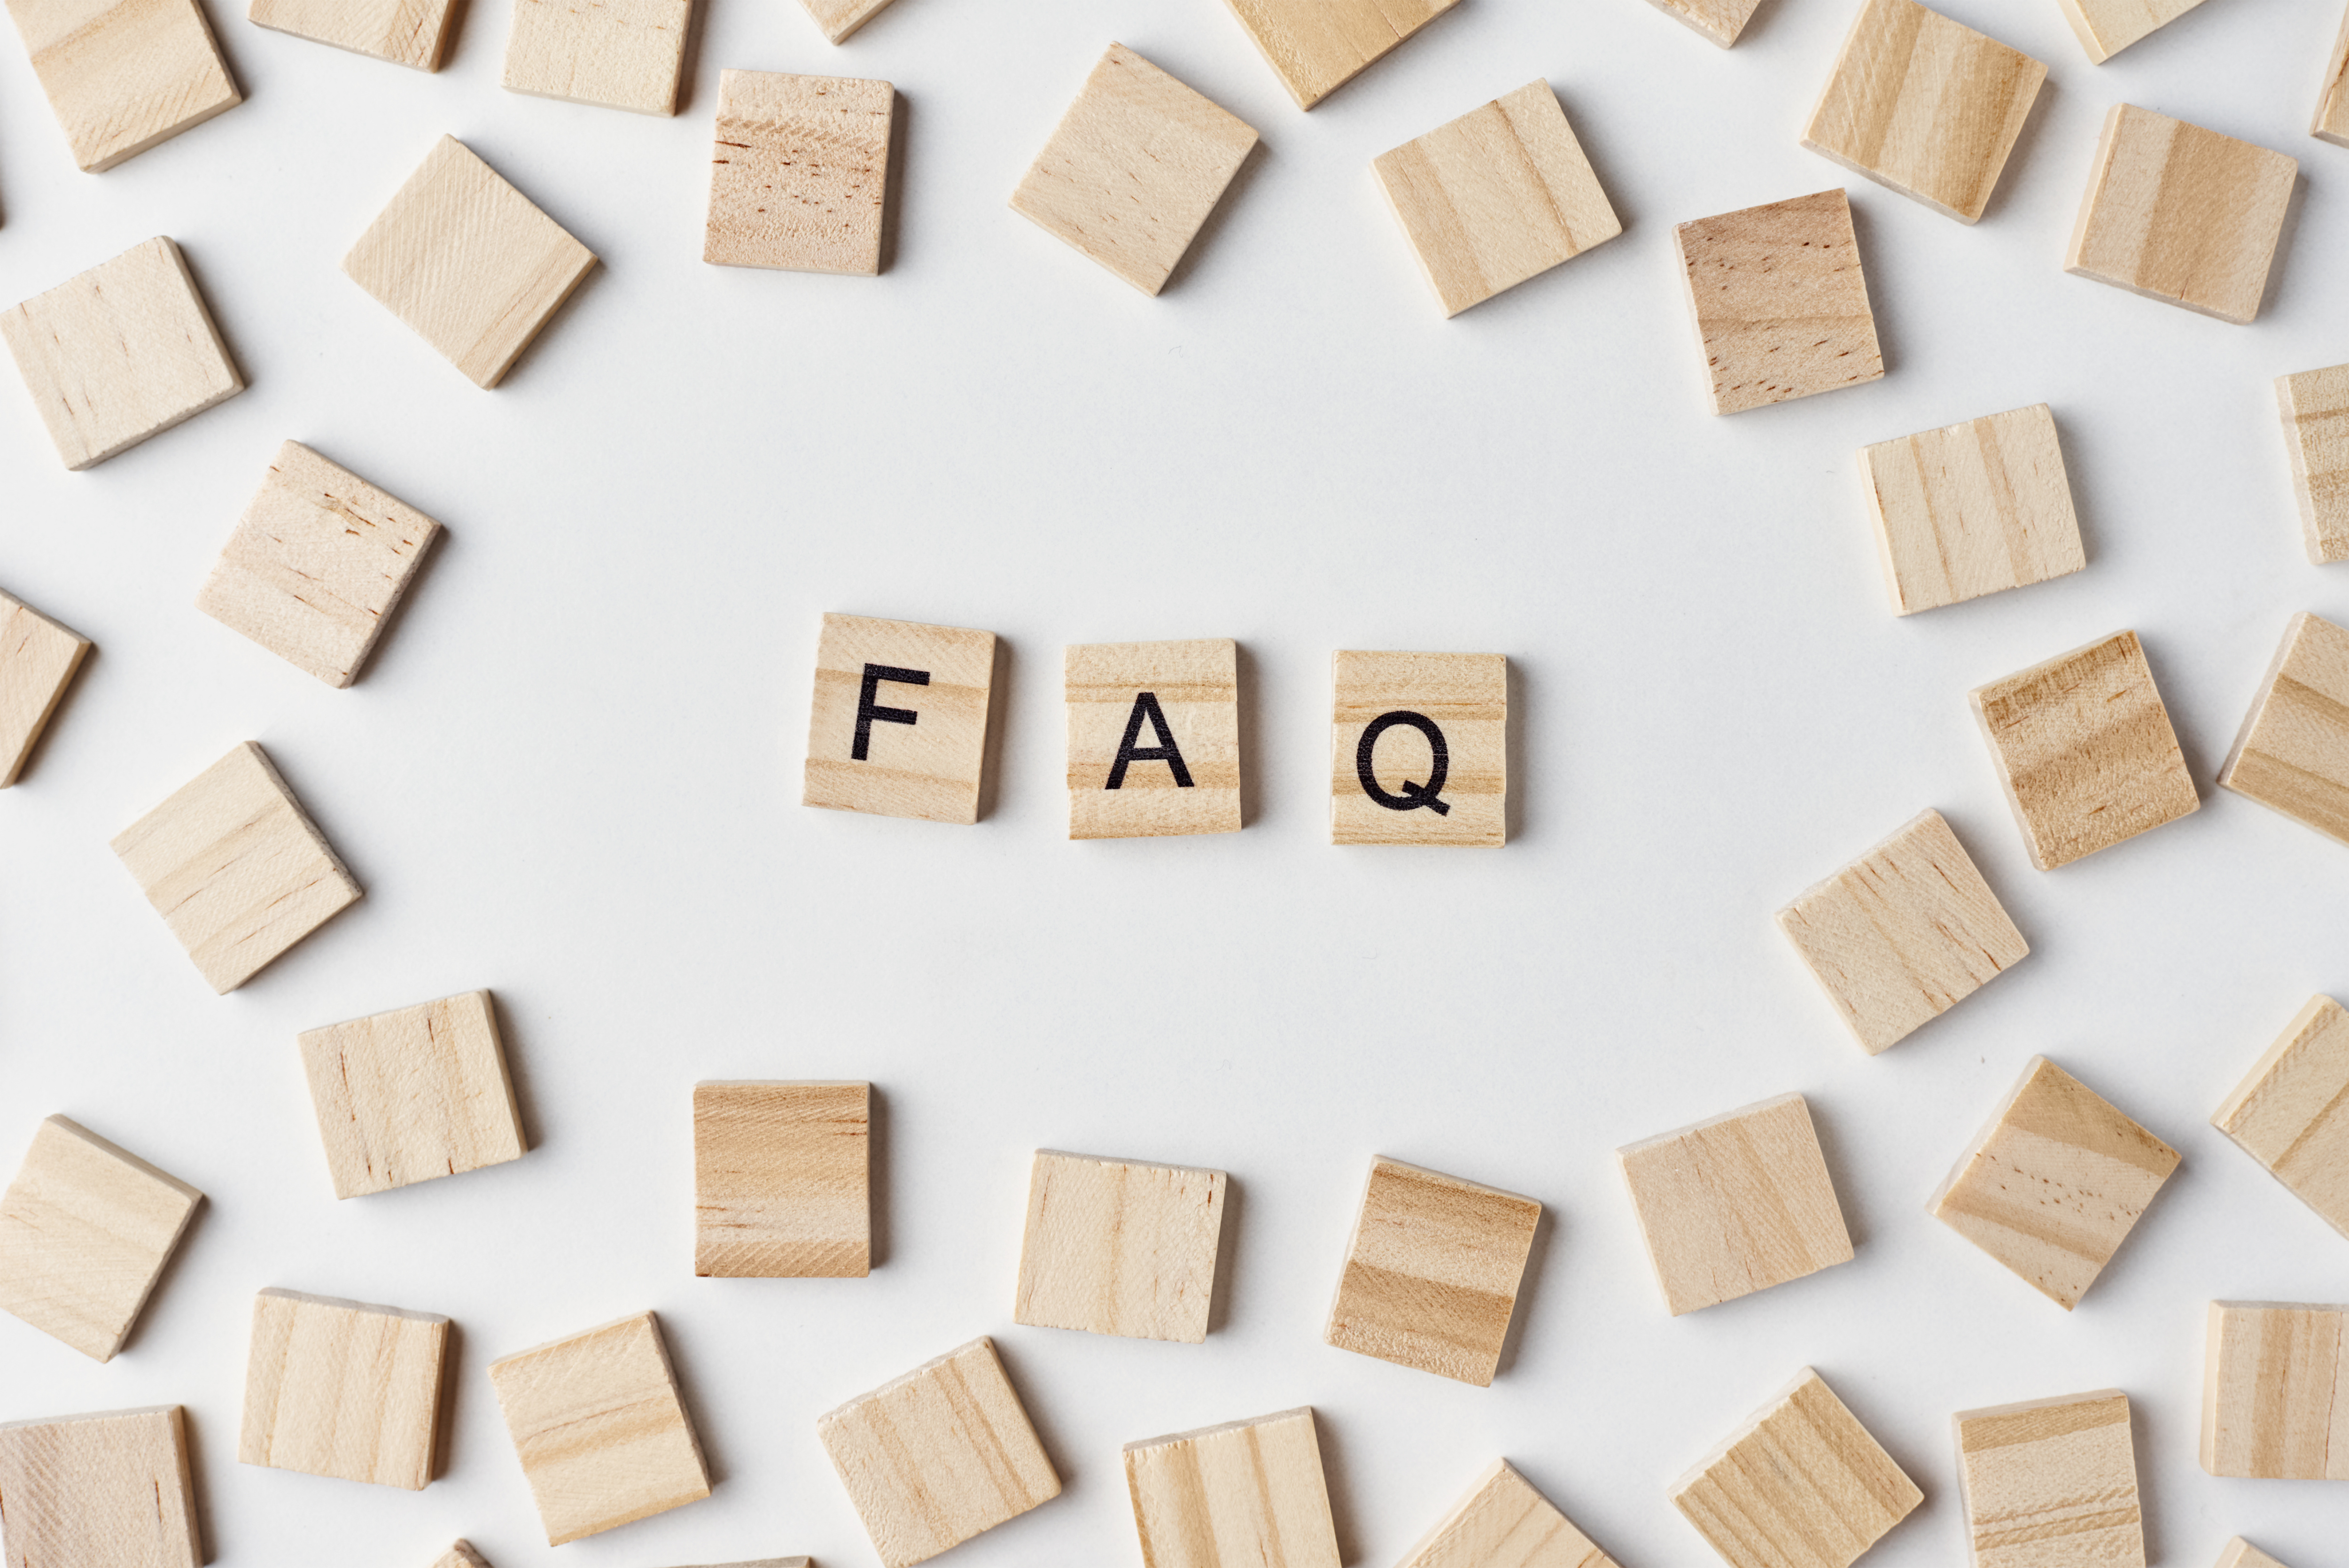 Wooden letter tiles spelling out “FAQ”.